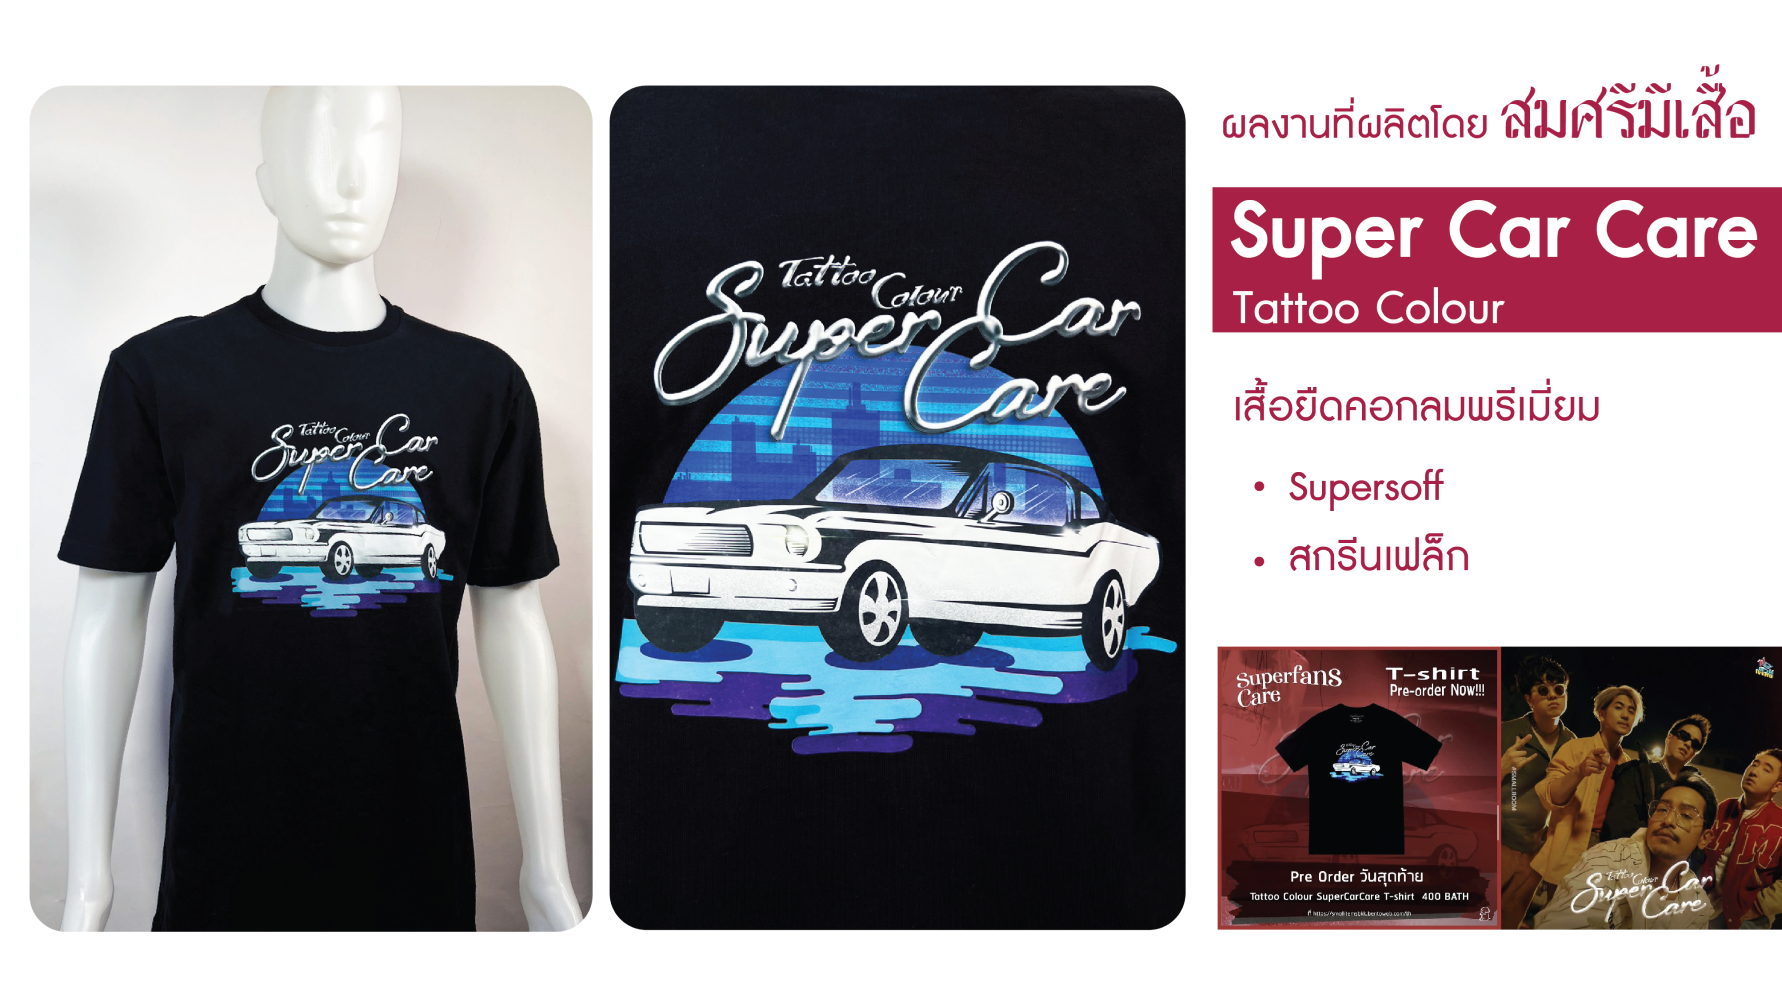 Super car care